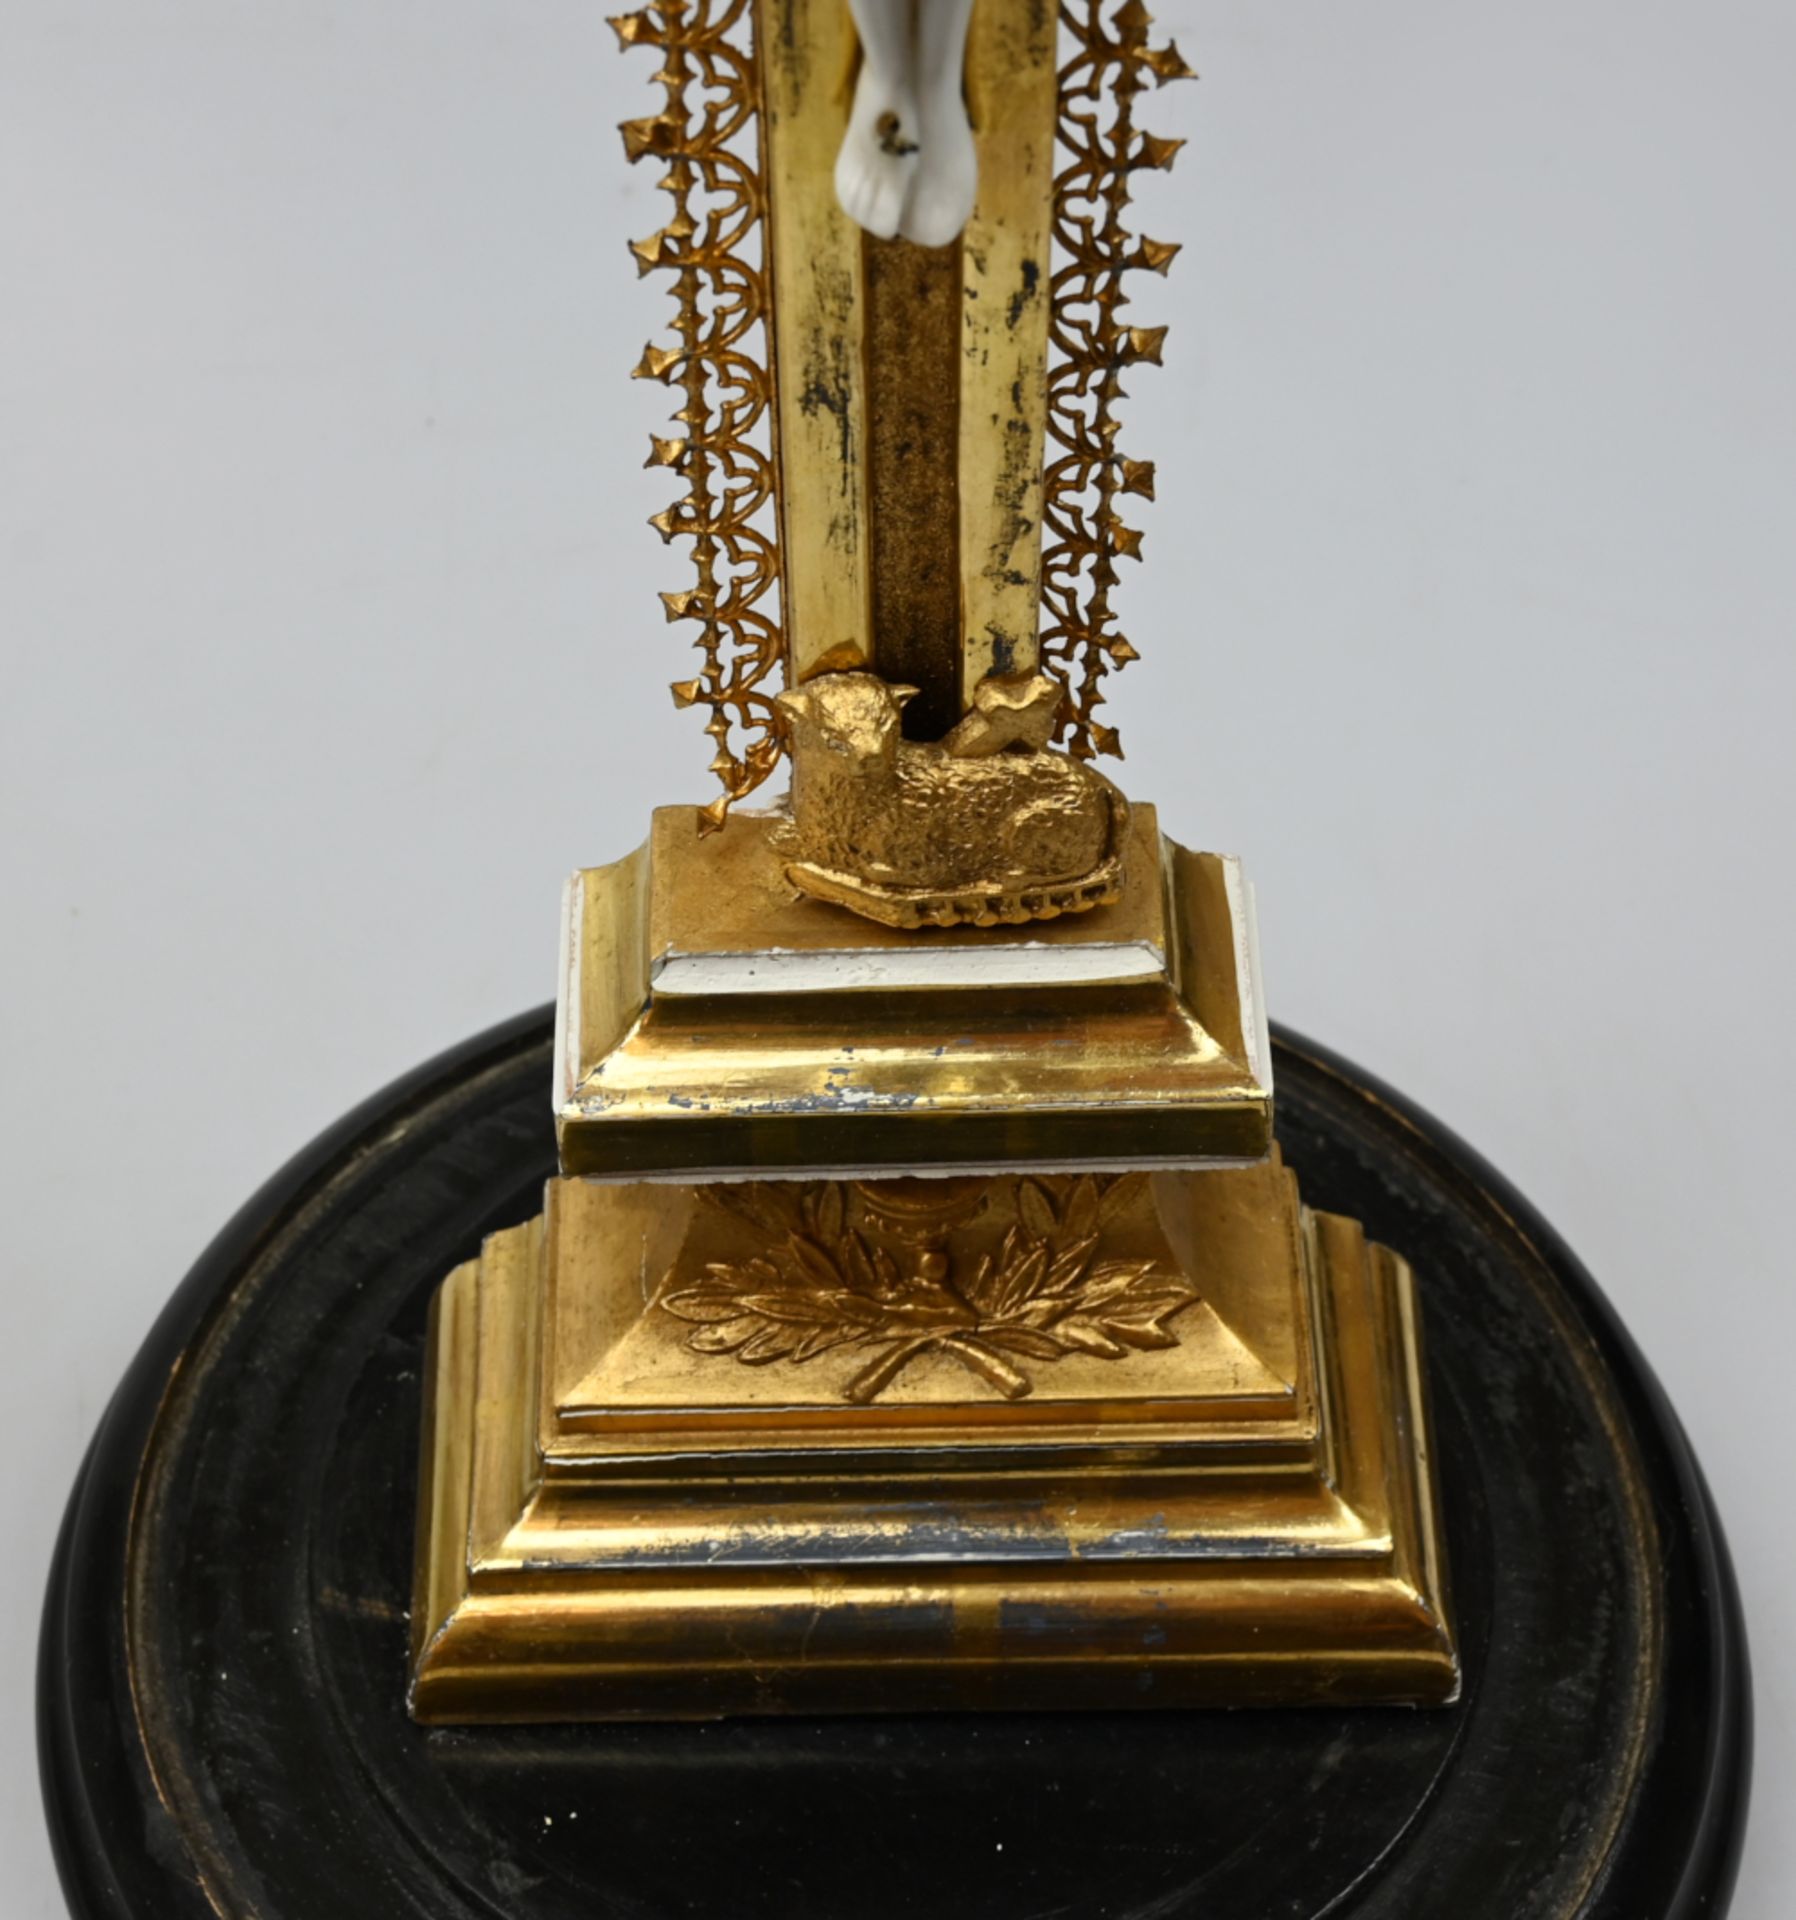 1 Kruzifix wohl 20. Jh. Holz/Stuck vergoldet, Christusfigur aus Bisquitporzellan, ca. H 47cm, mit Gl - Bild 3 aus 4